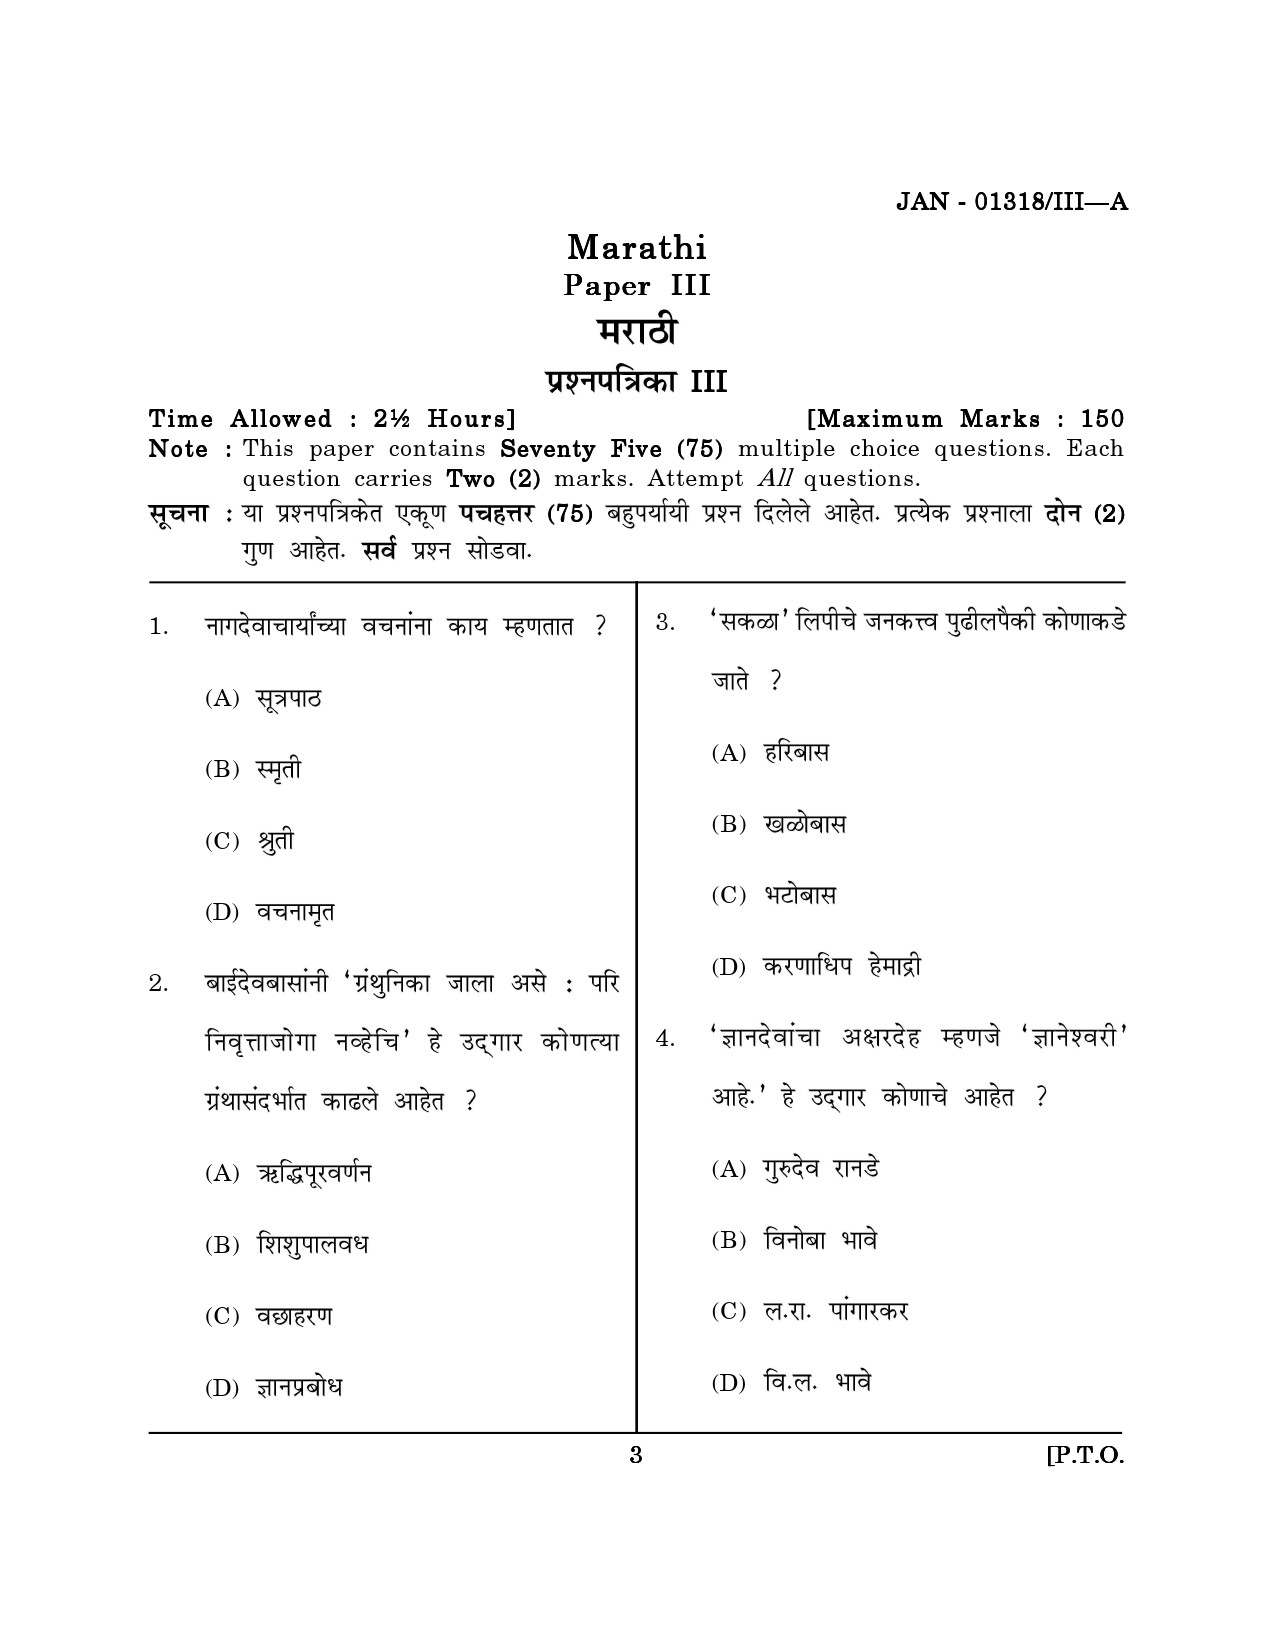 Maharashtra SET Marathi Question Paper III January 2018 2